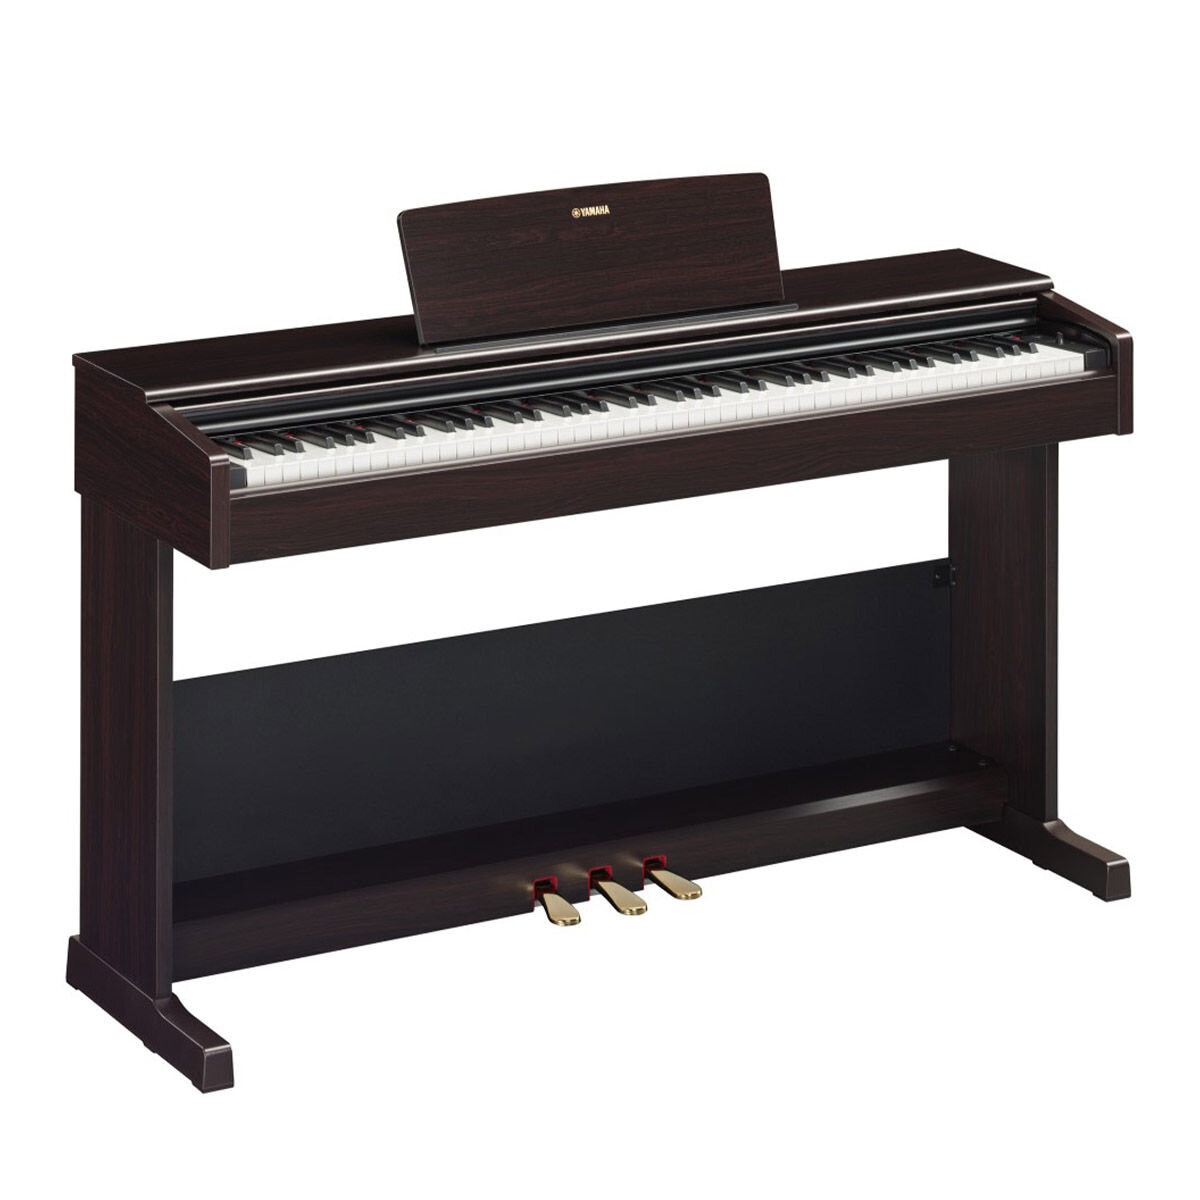 Yamaha Arius 數位鋼琴 深玫瑰木色 YDP105R